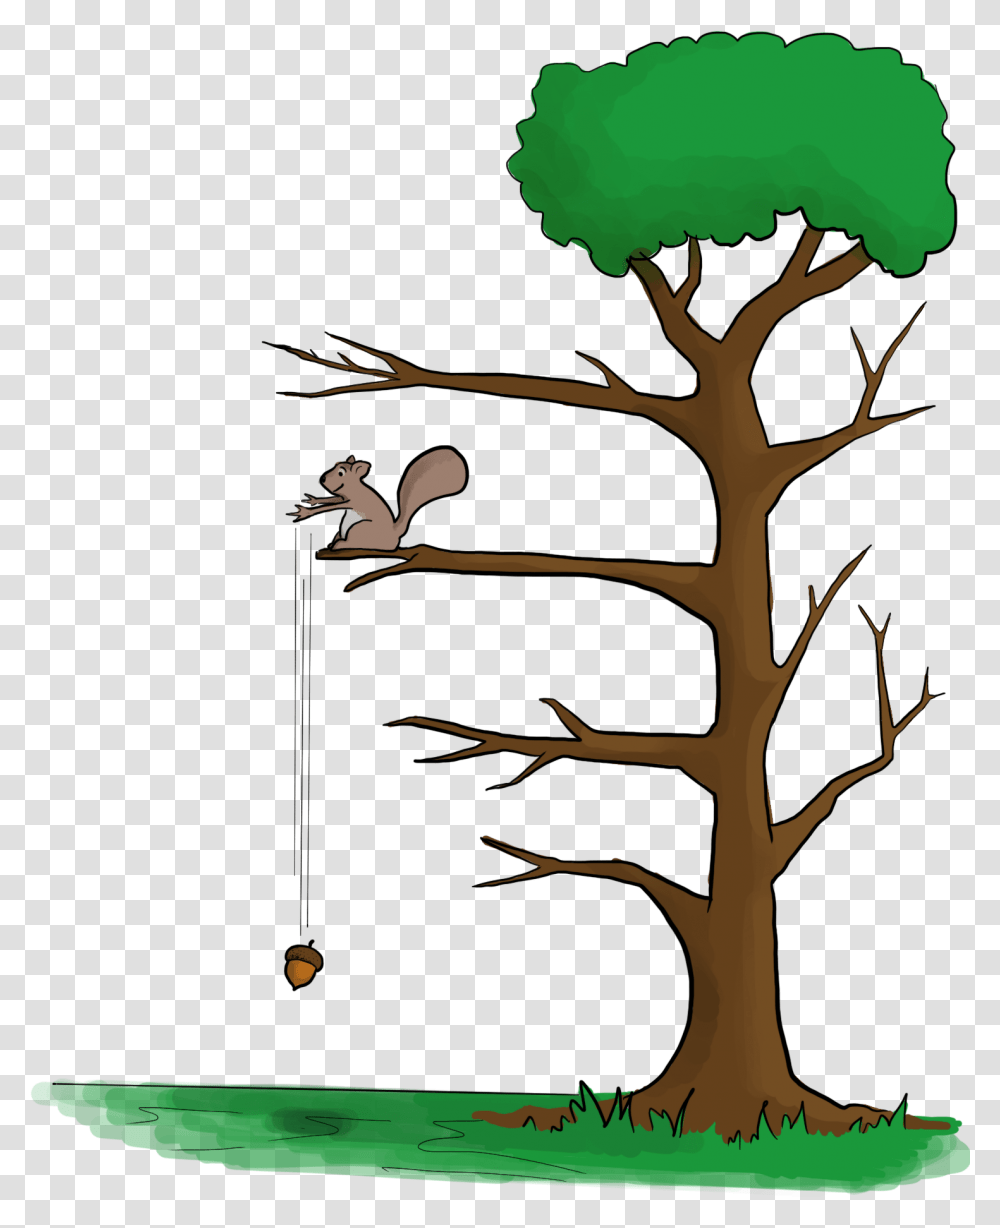 Homework Illustration Clipart Full Size Clipart Tree, Plant, Tree Trunk, Bird, Flower Transparent Png